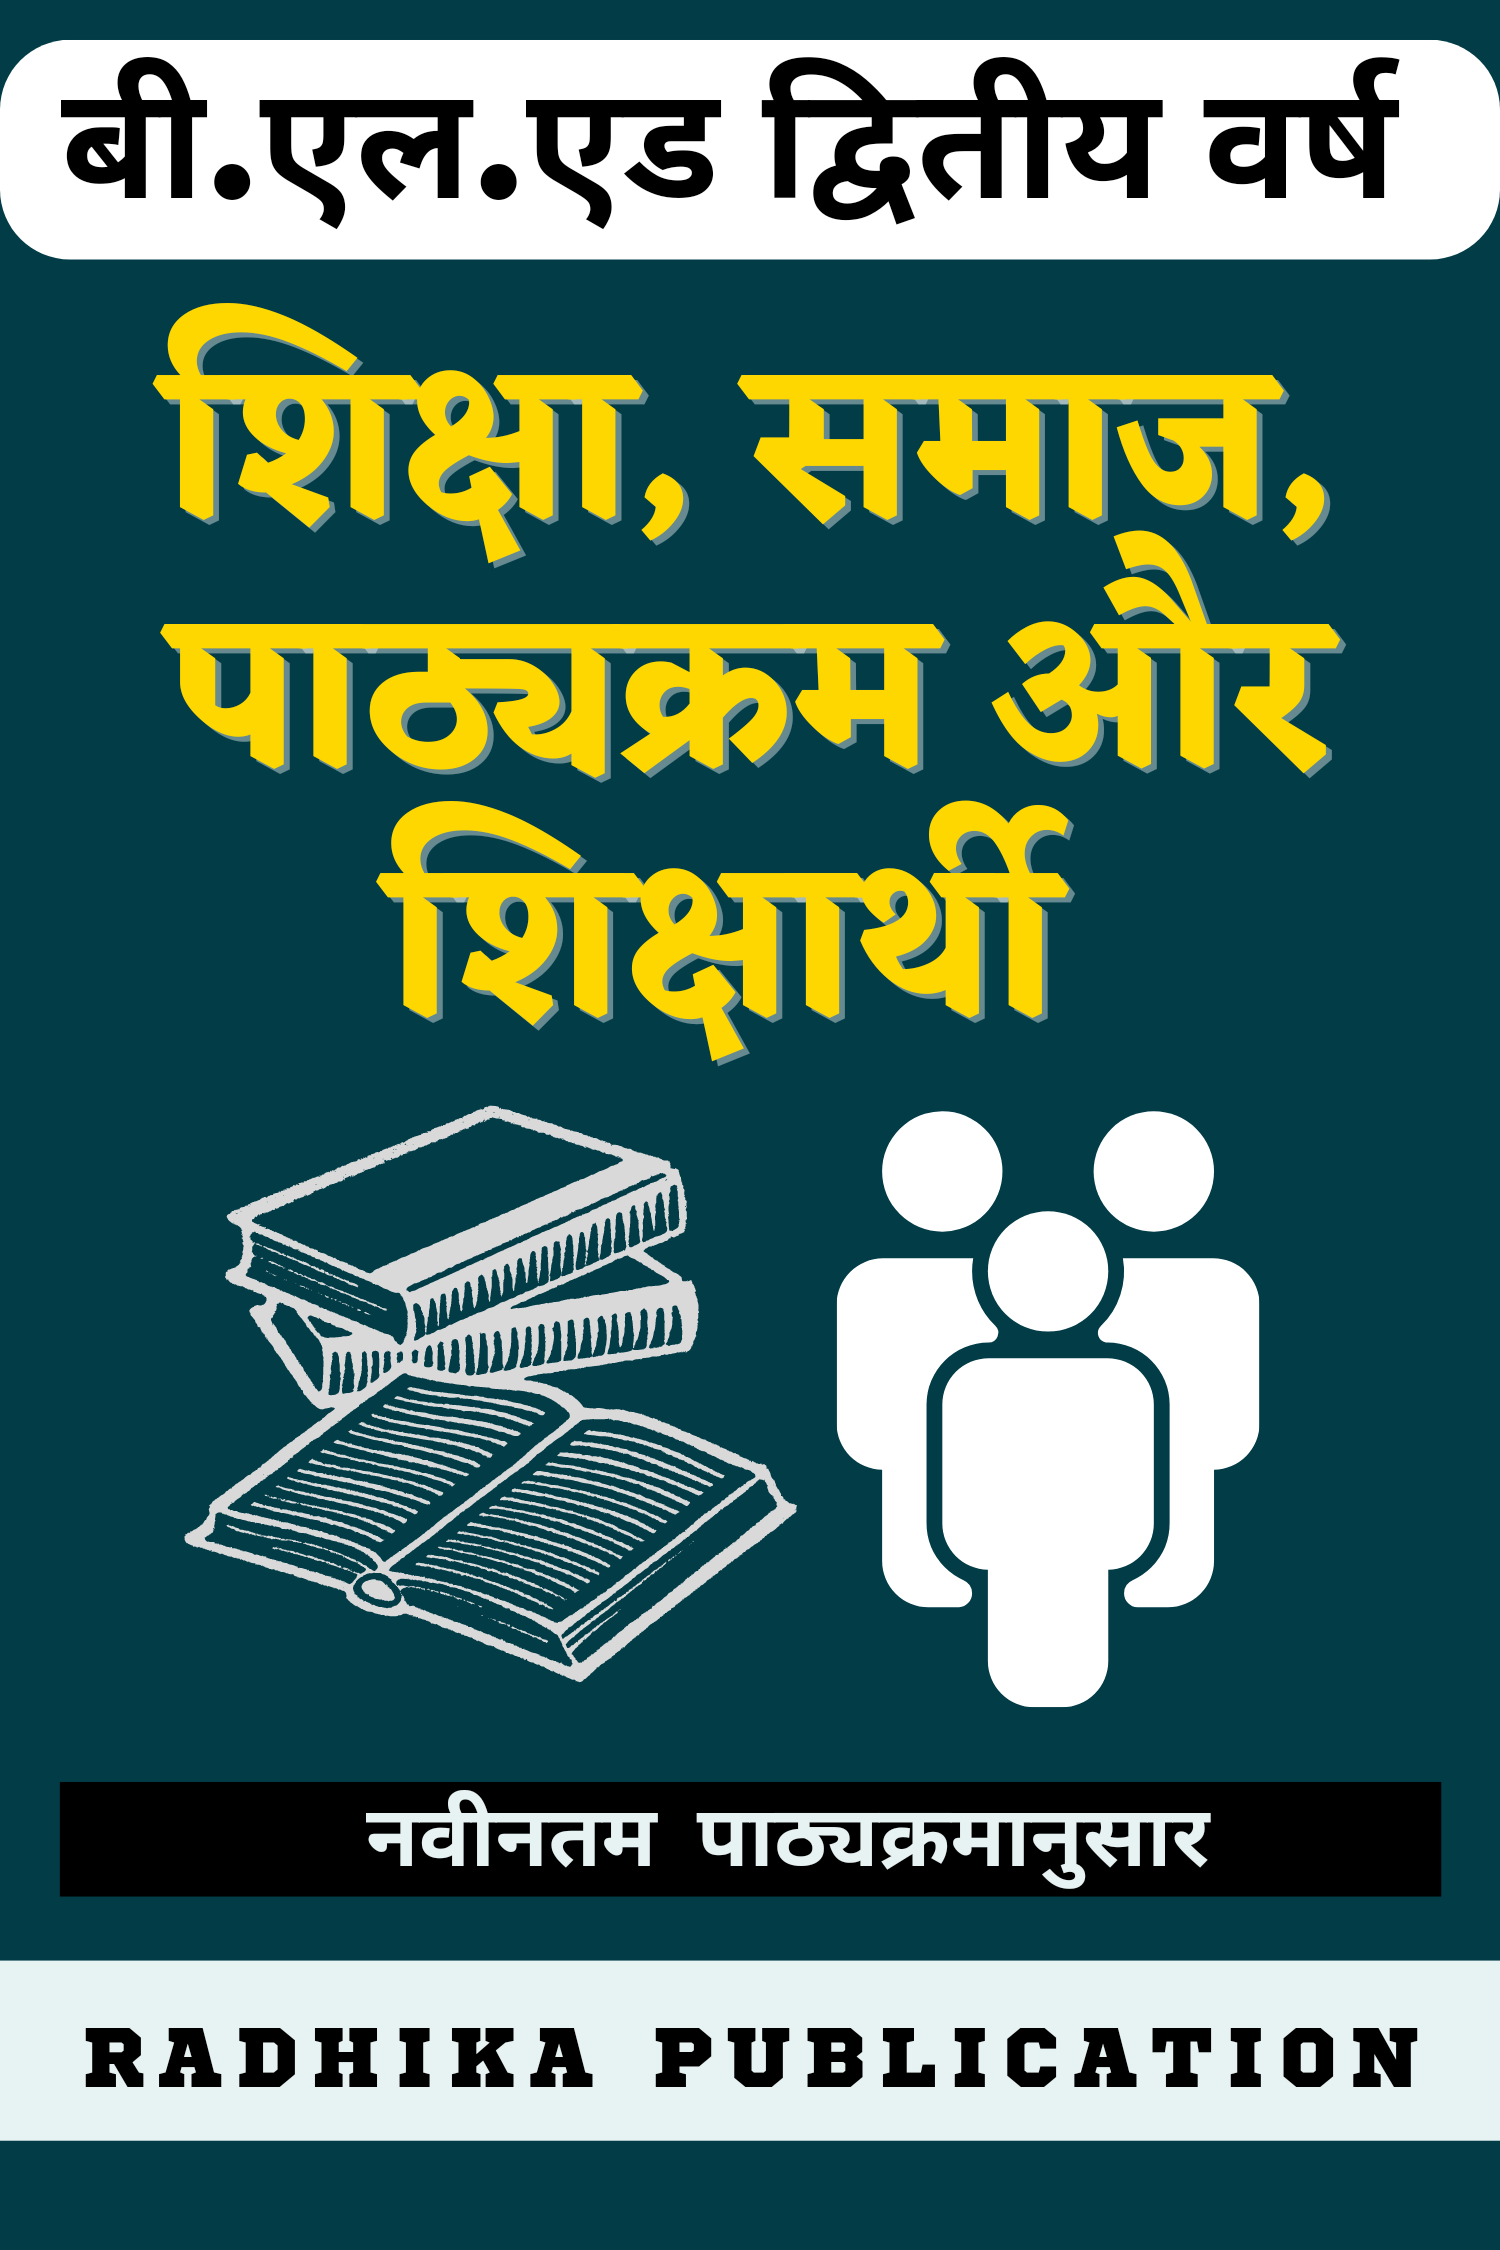 Beled second year book for mjpru in hindi